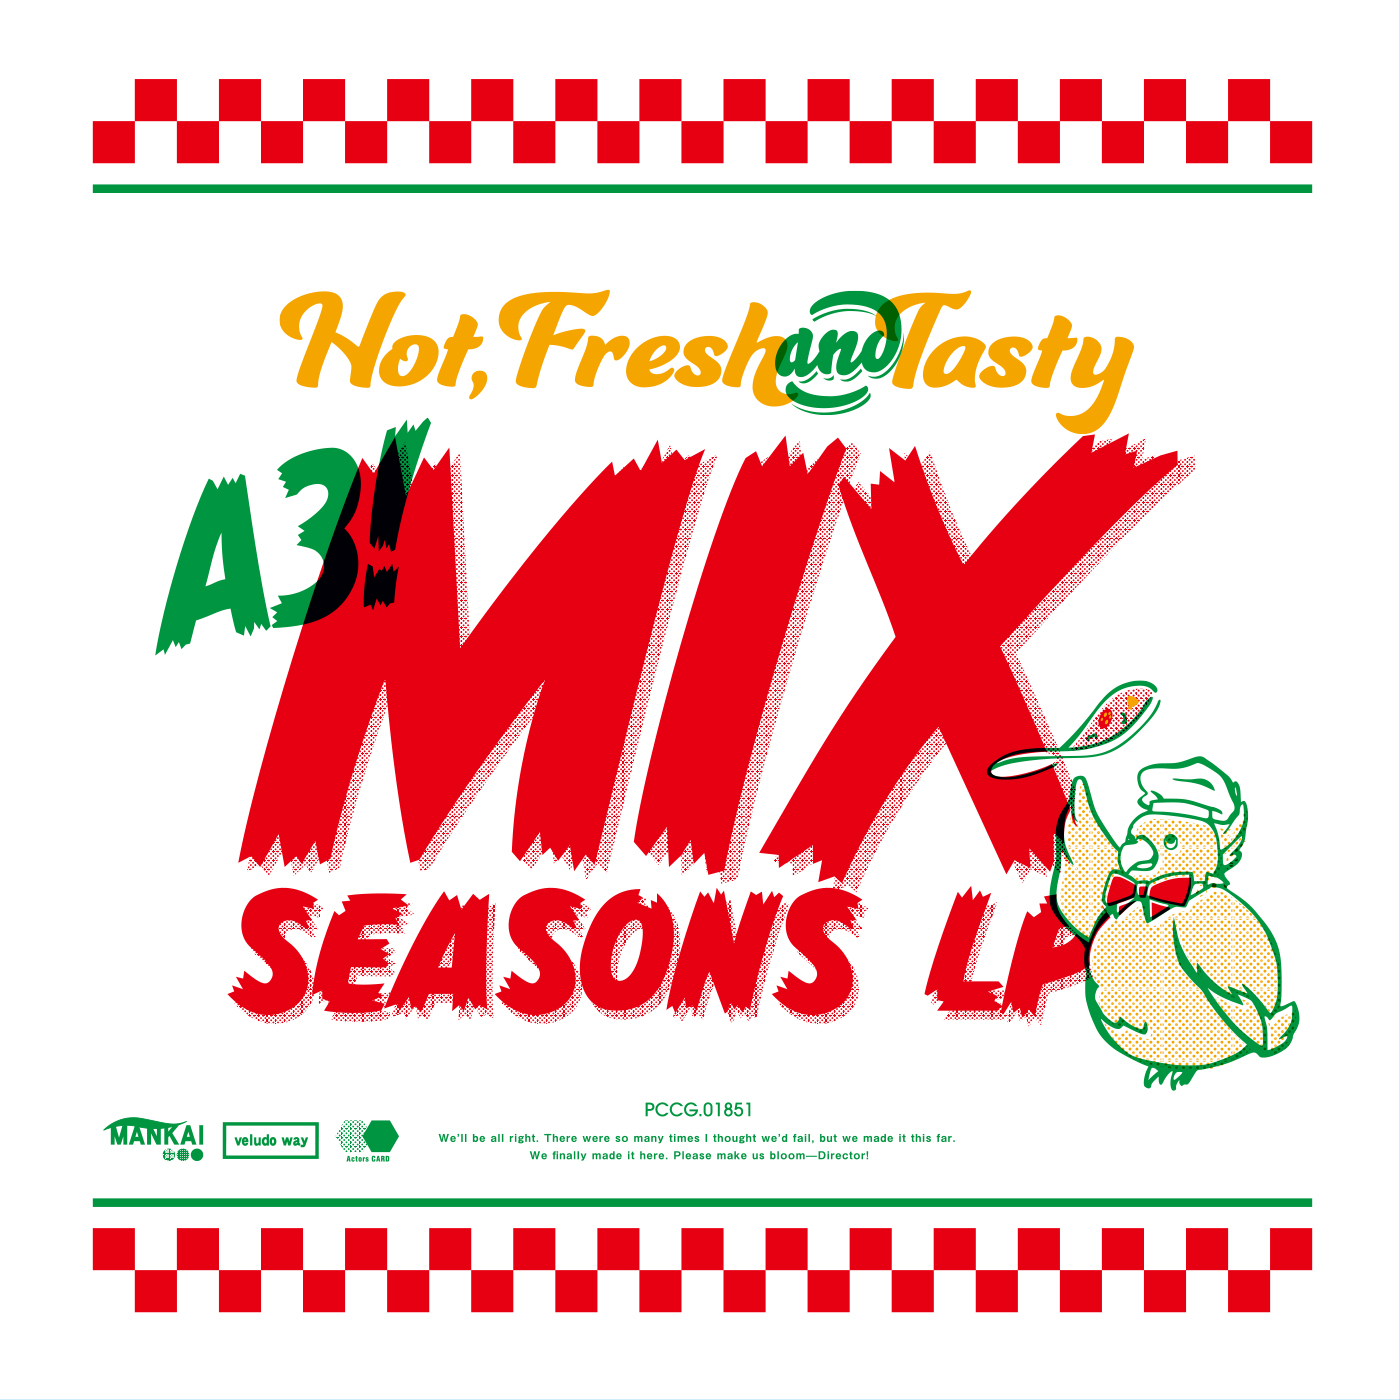 【A3!】A3! MANKAI Company Mix Performance Album "A3! MIX  SEASONS LP" (CD only)